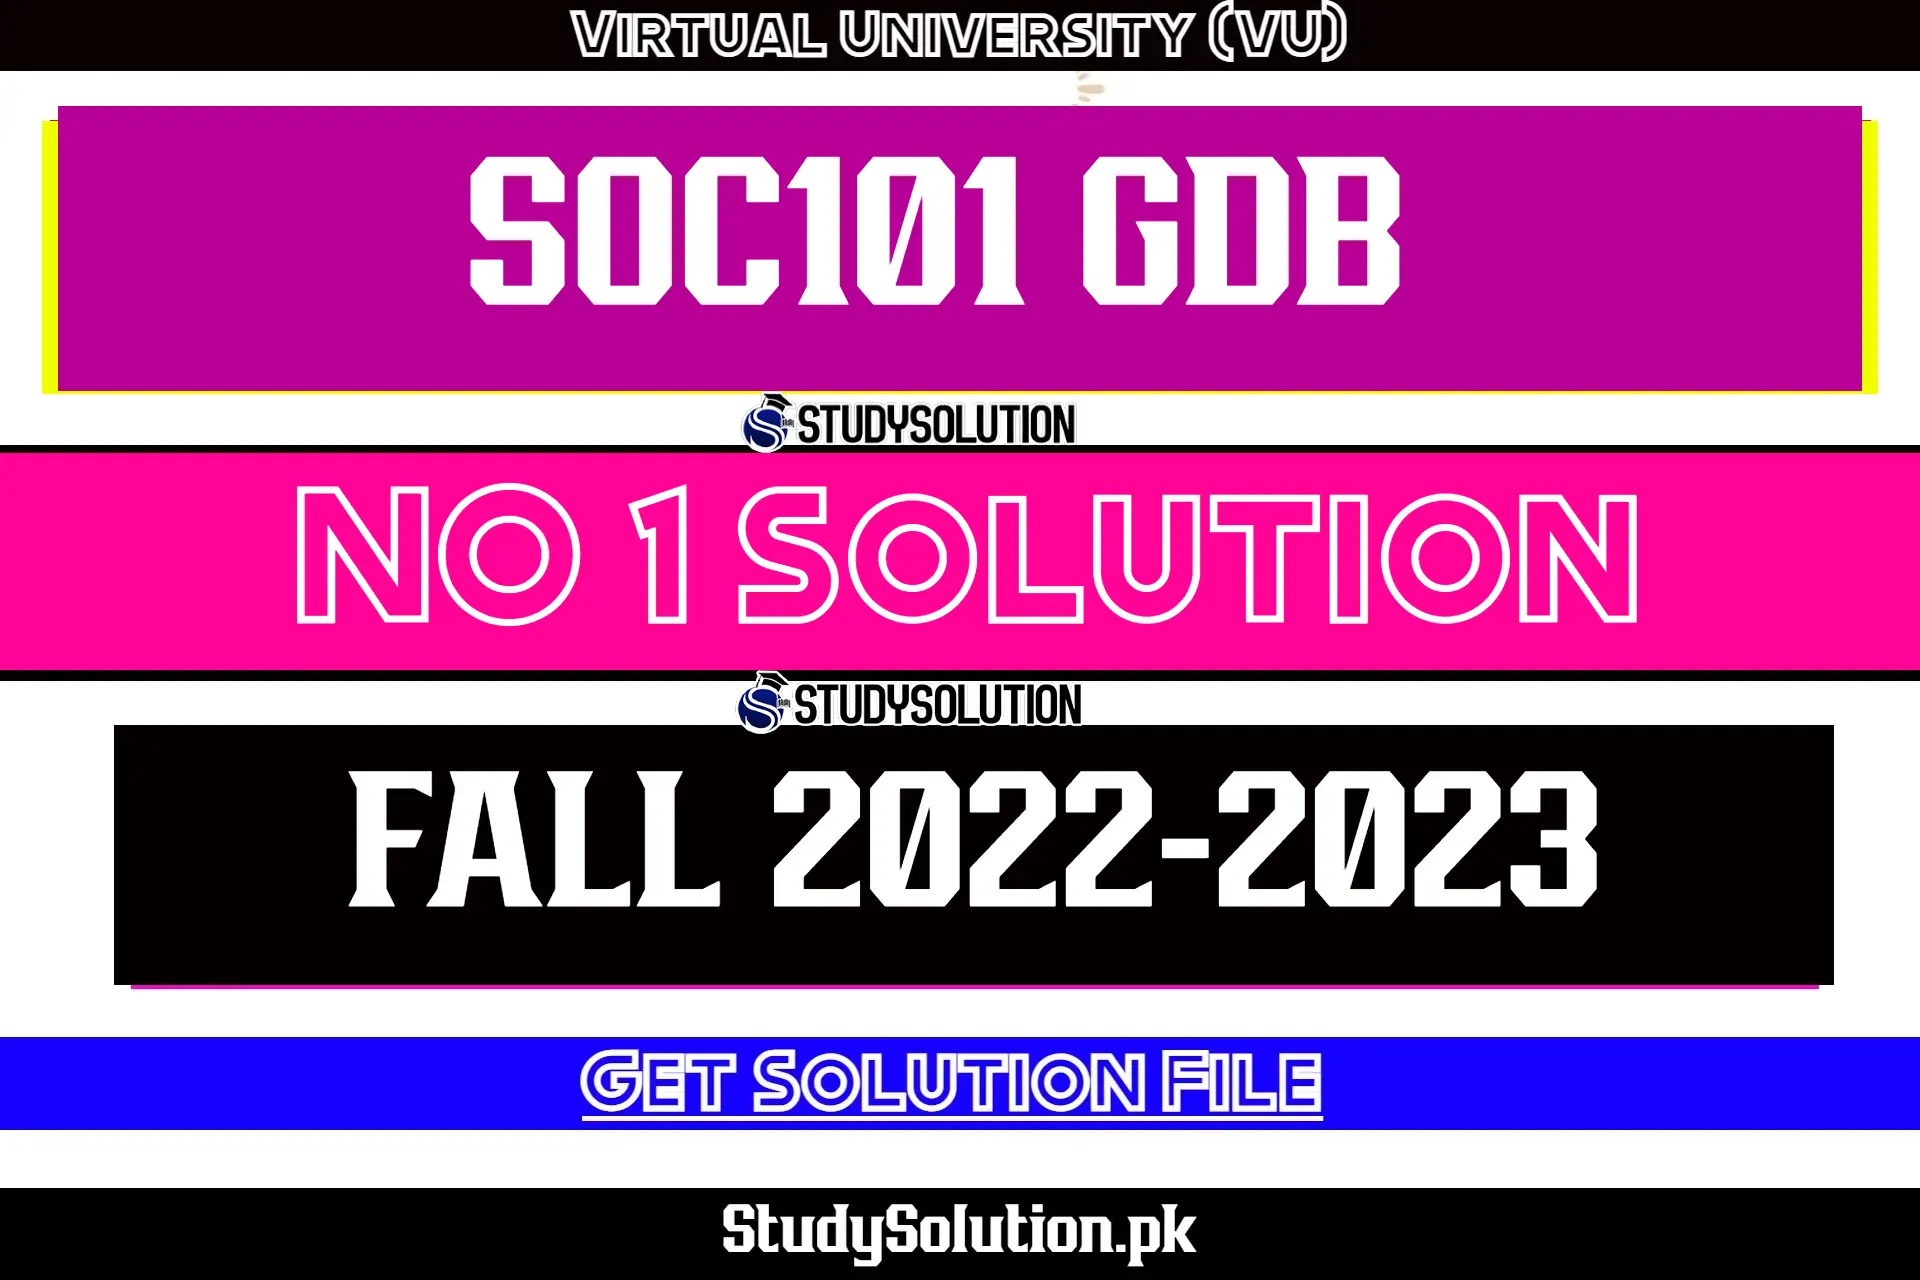 SOC101 GDB No 1 Solution Fall 2022